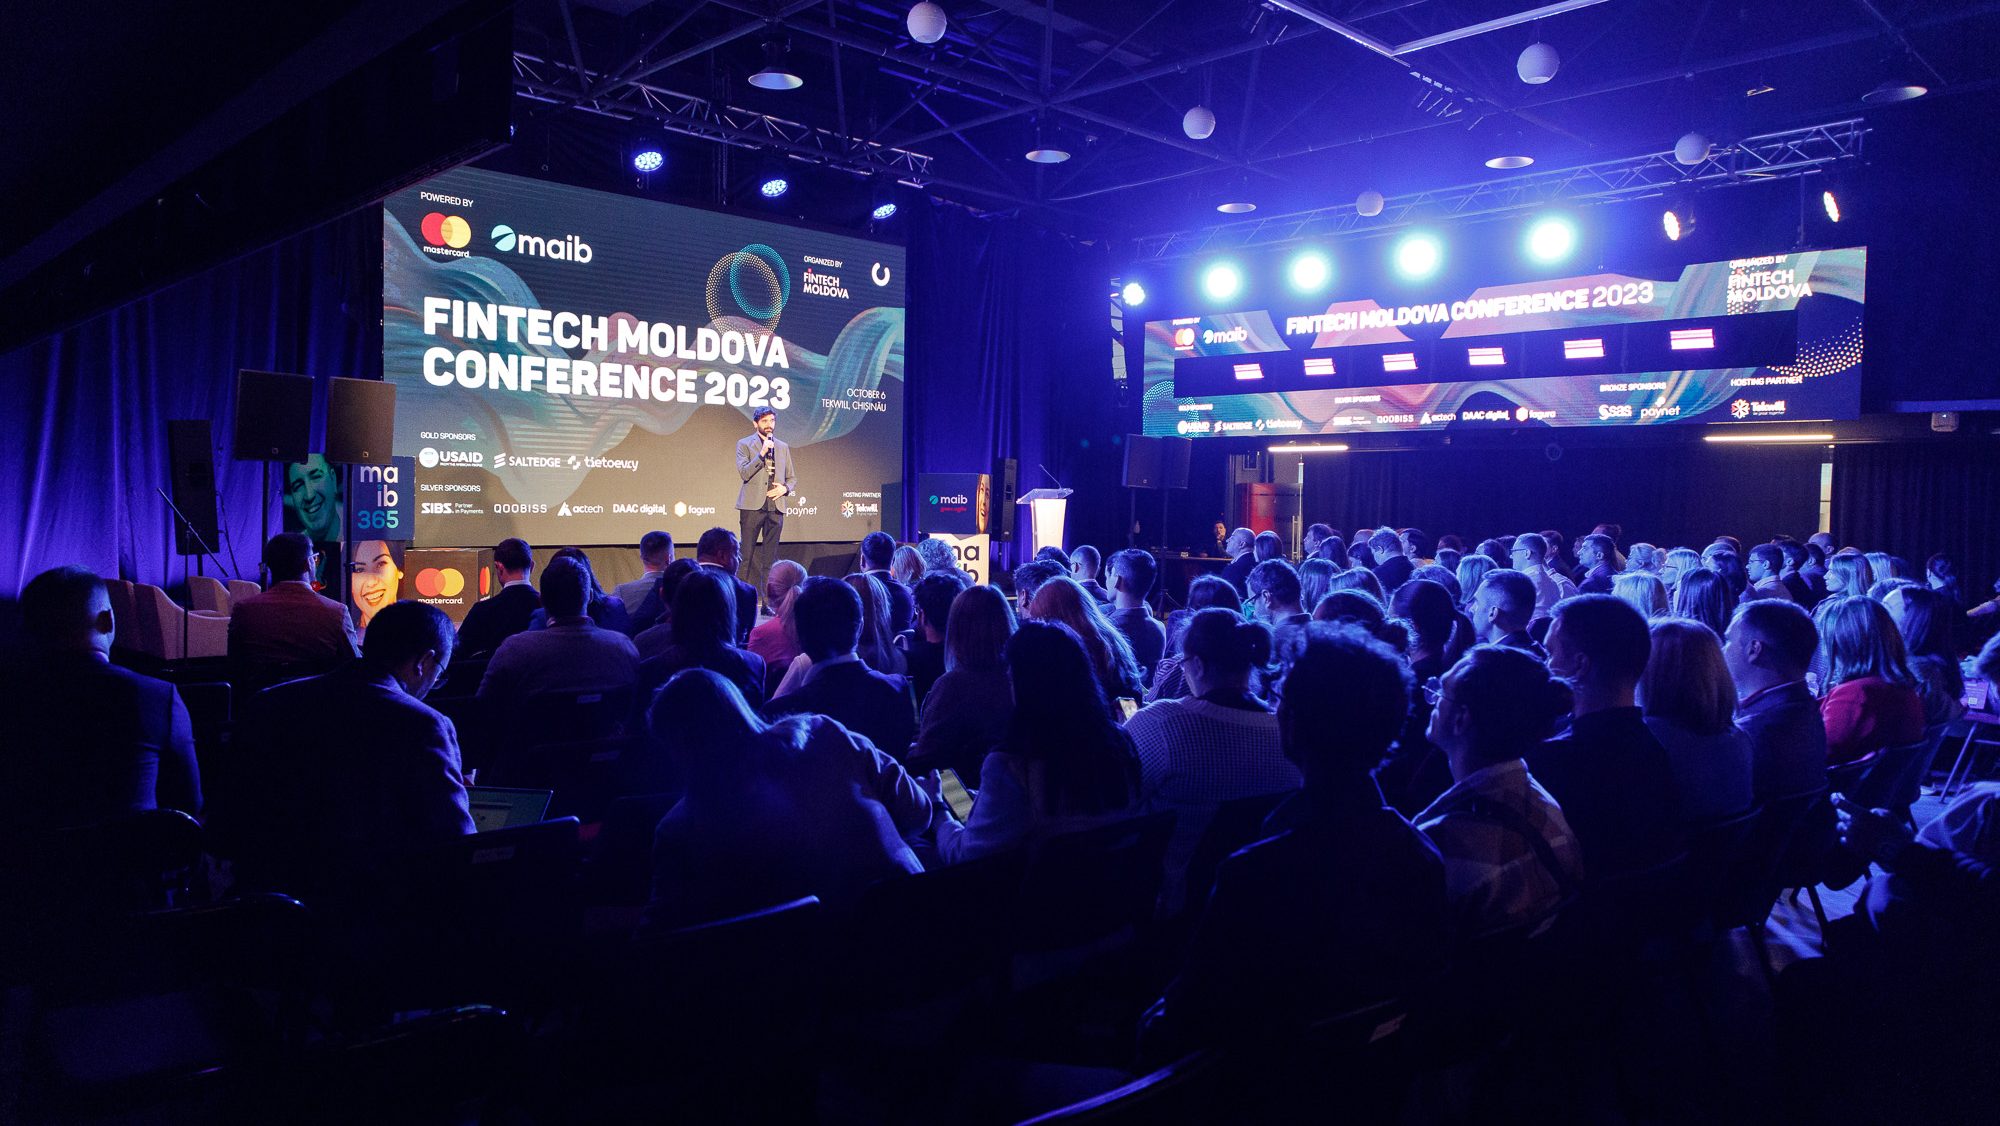 Fintech Moldova Conference 2023